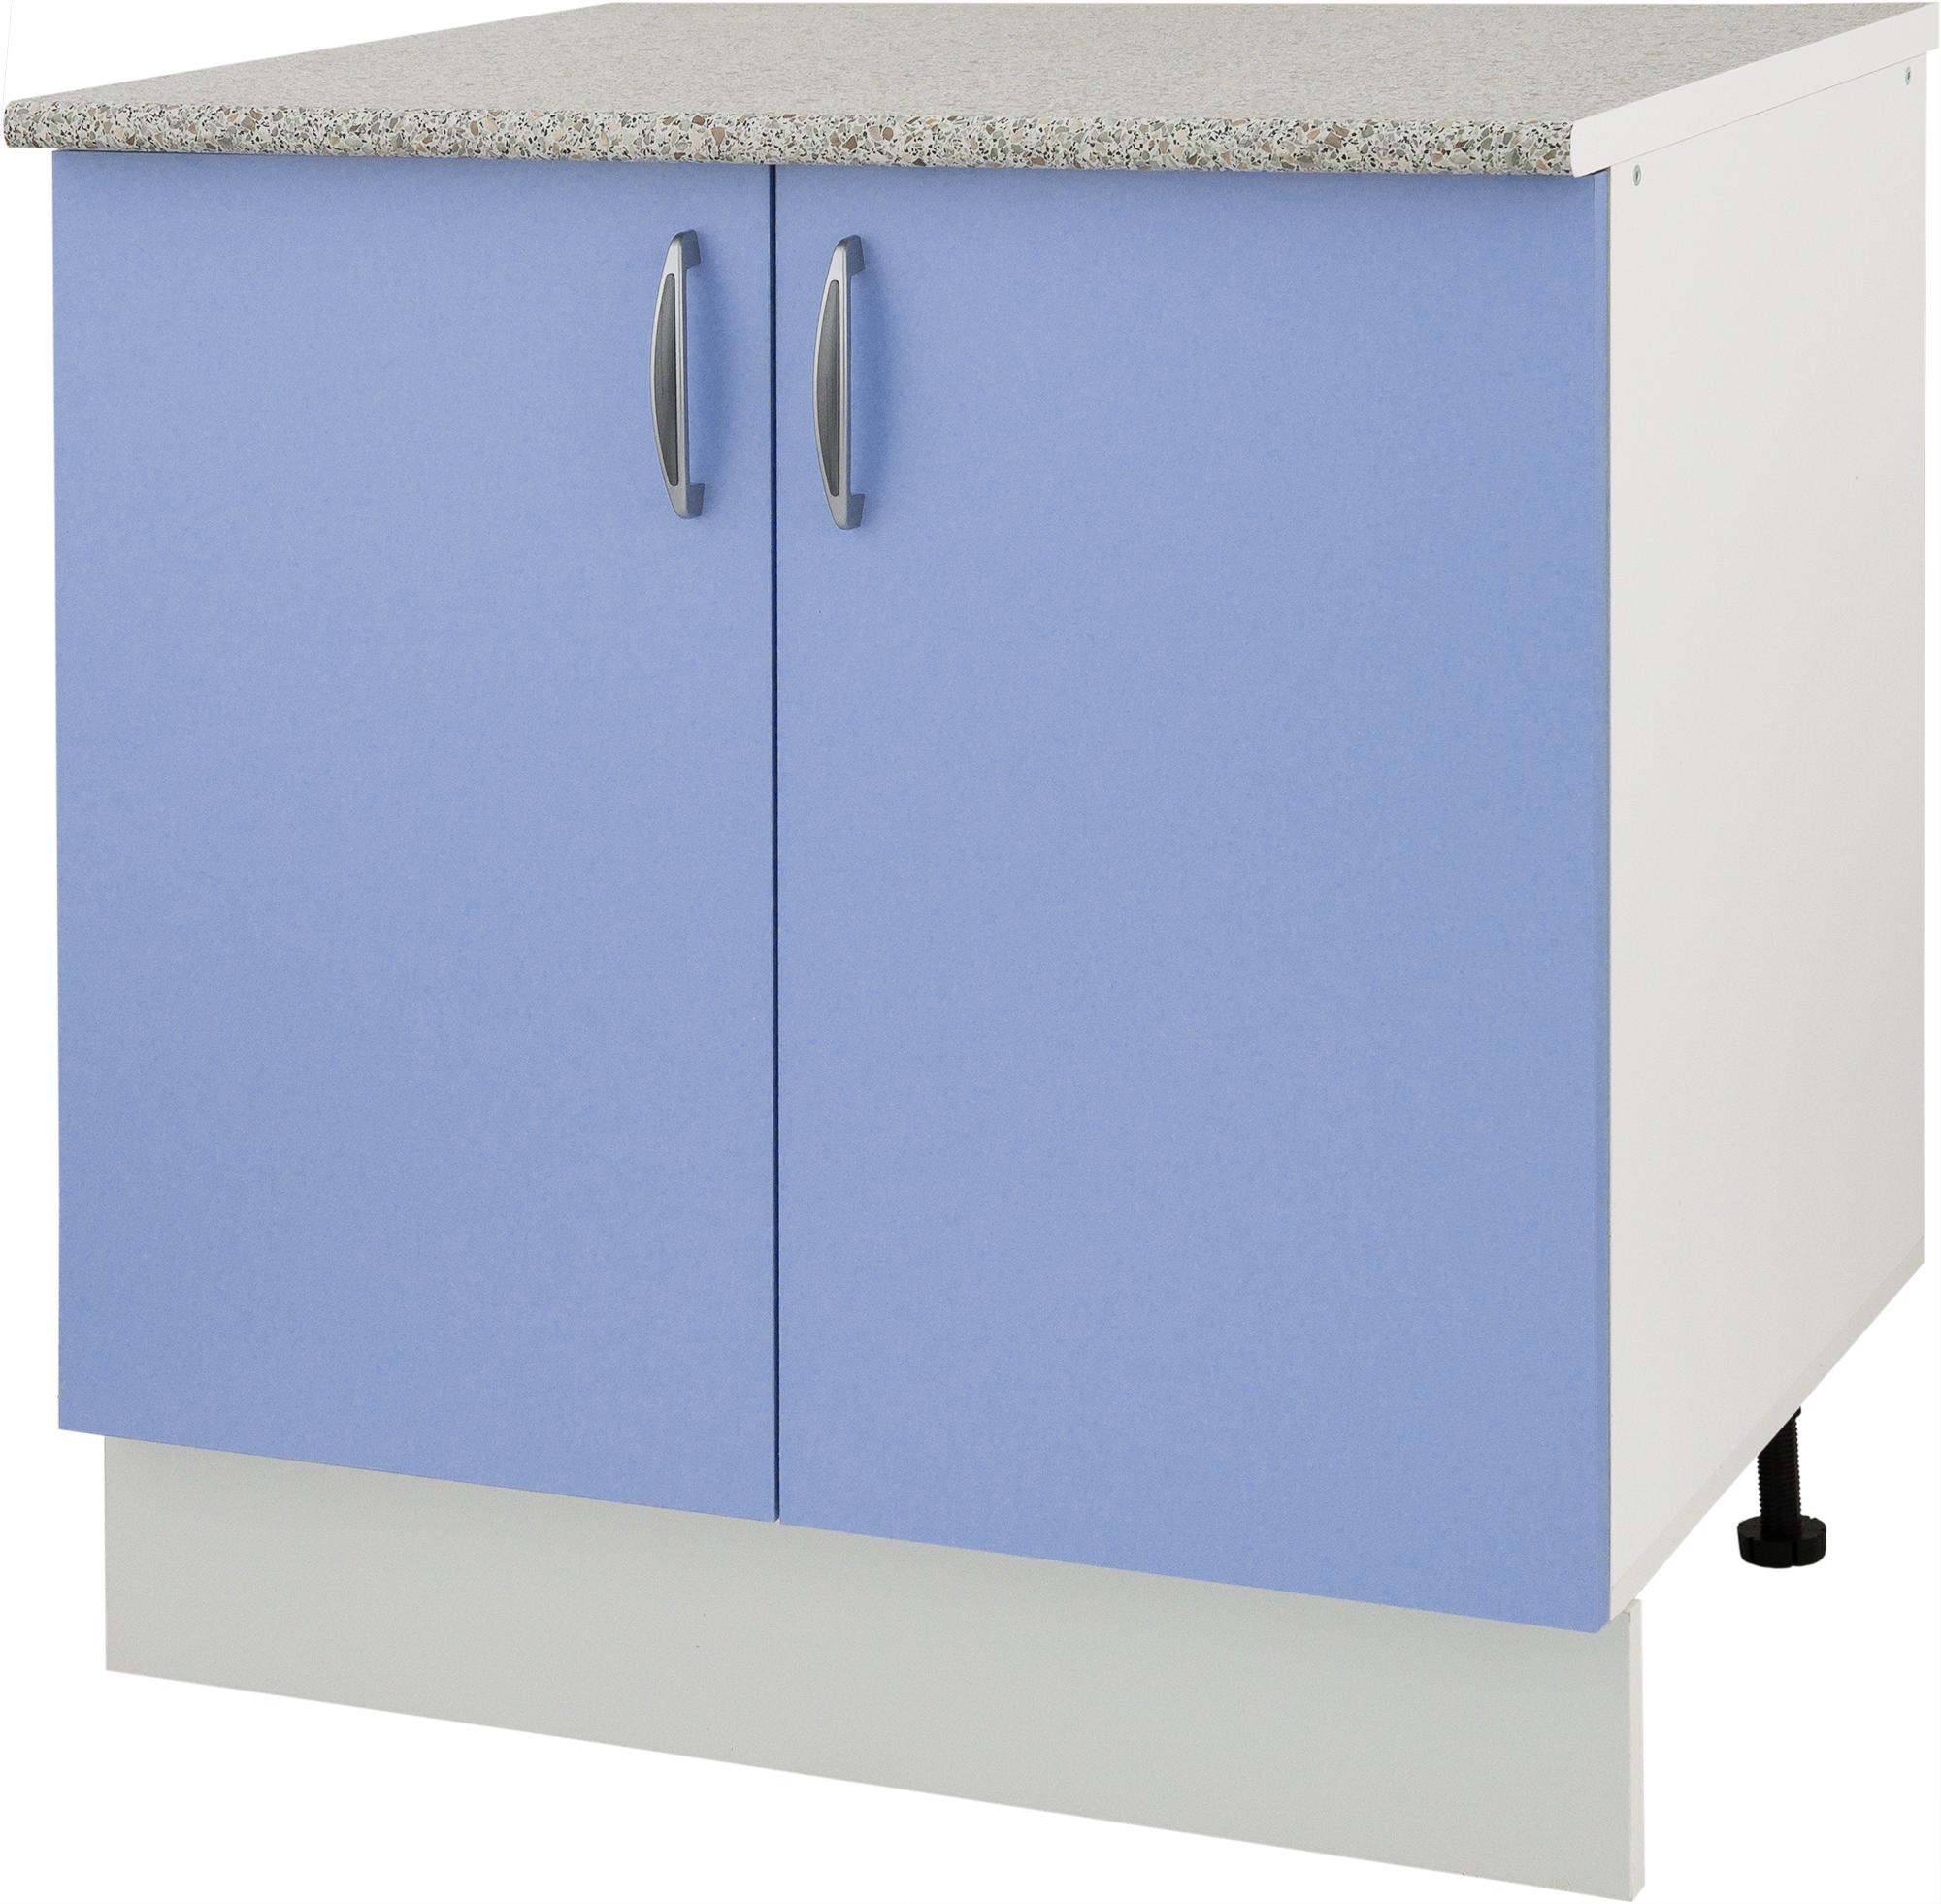 Куплю кухонный шкаф б у. Шкаф напольный Лагуна СП 85х80 см цвет голубой. Шкаф кухонный напольный 80 см Леруа Мерлен. Шкаф напольный «Лагуна д». Кухня Лагуна Леруа Мерлен.